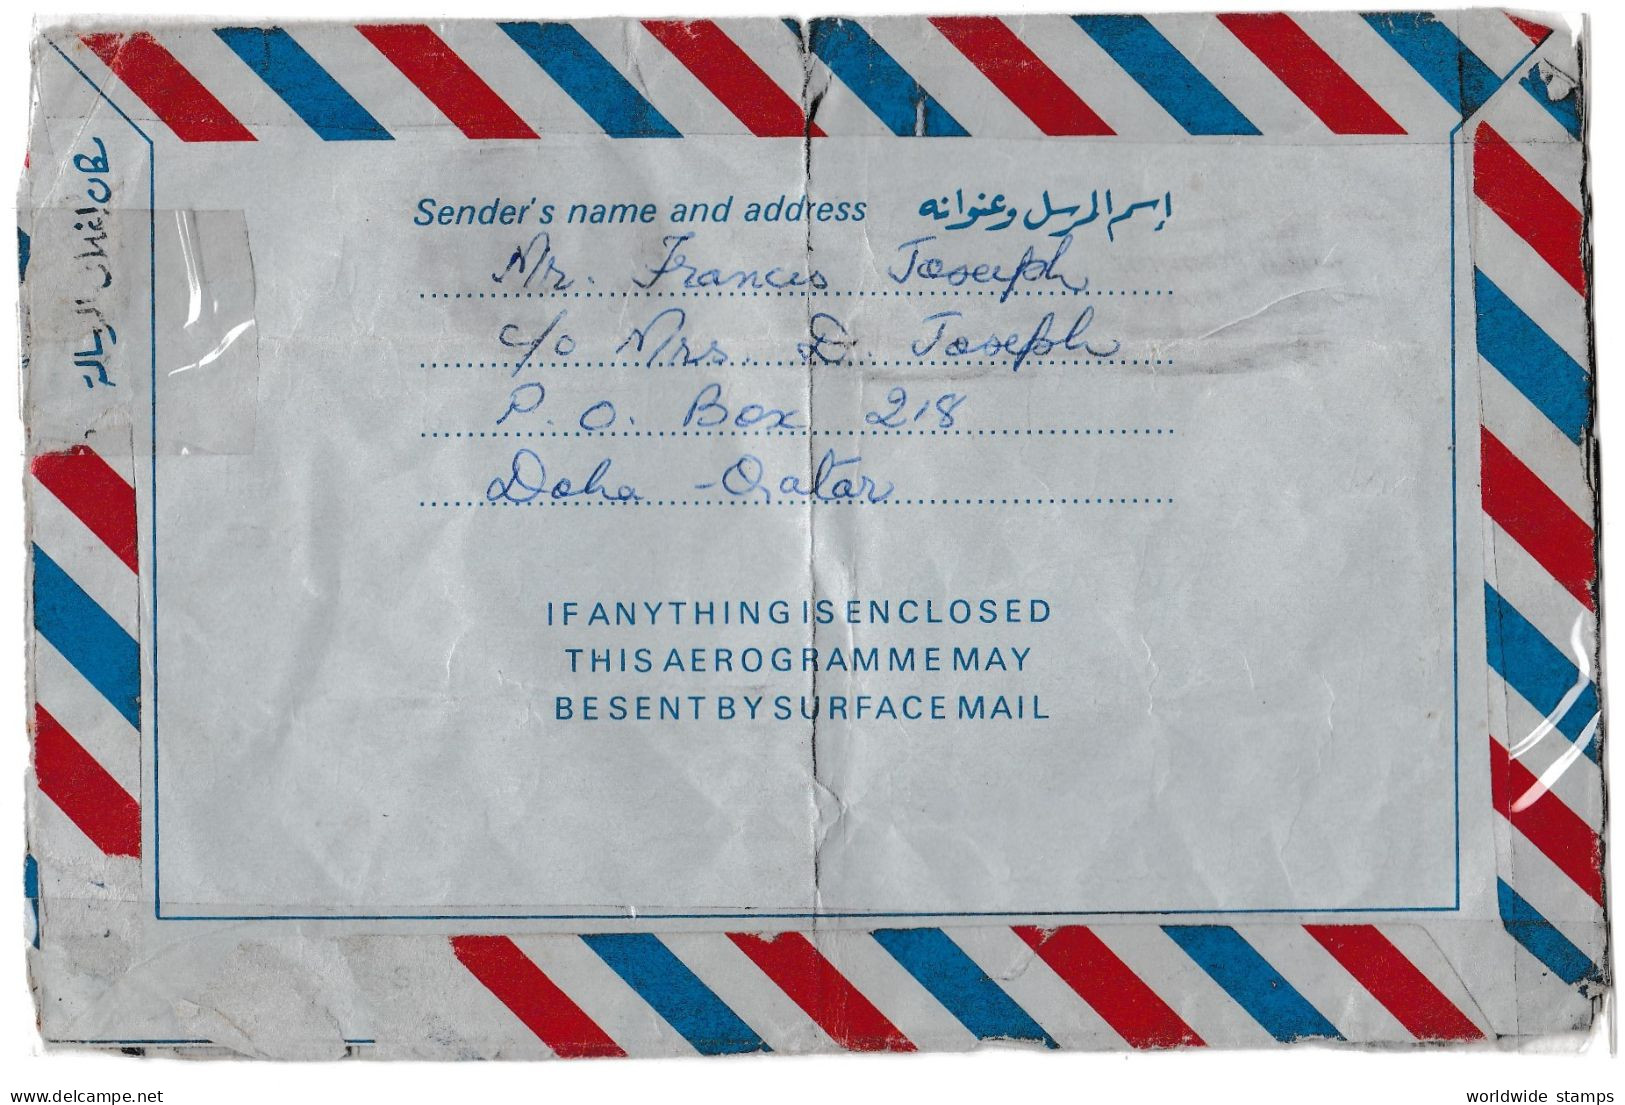 Qatar 1977 Aerogramme 50d Postal Used Prepaid Printed Stamp Sent To Pakistan As Scan. - Qatar